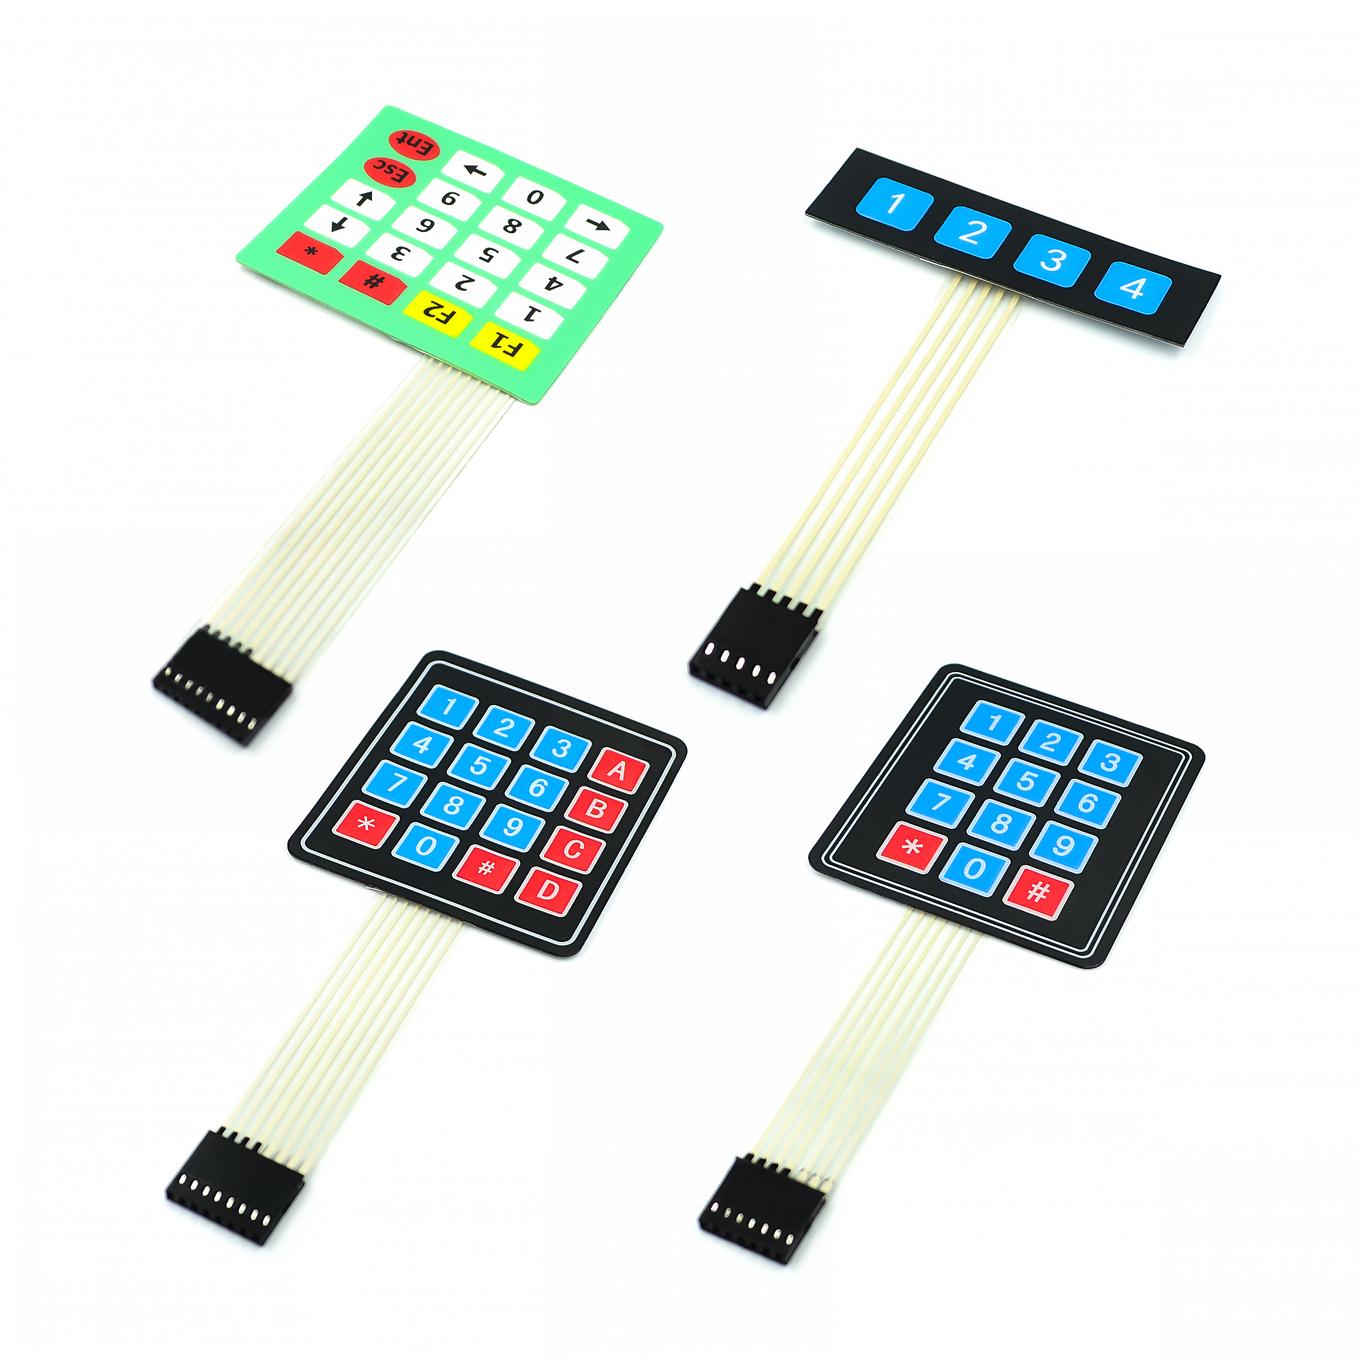 1*2 3 4 5 Key Button Membrane Switch 3*4 4X5 Matrix Array Keyboard 1X6 Keypad with LED Control Panel Pad DIY Kit For Arduino